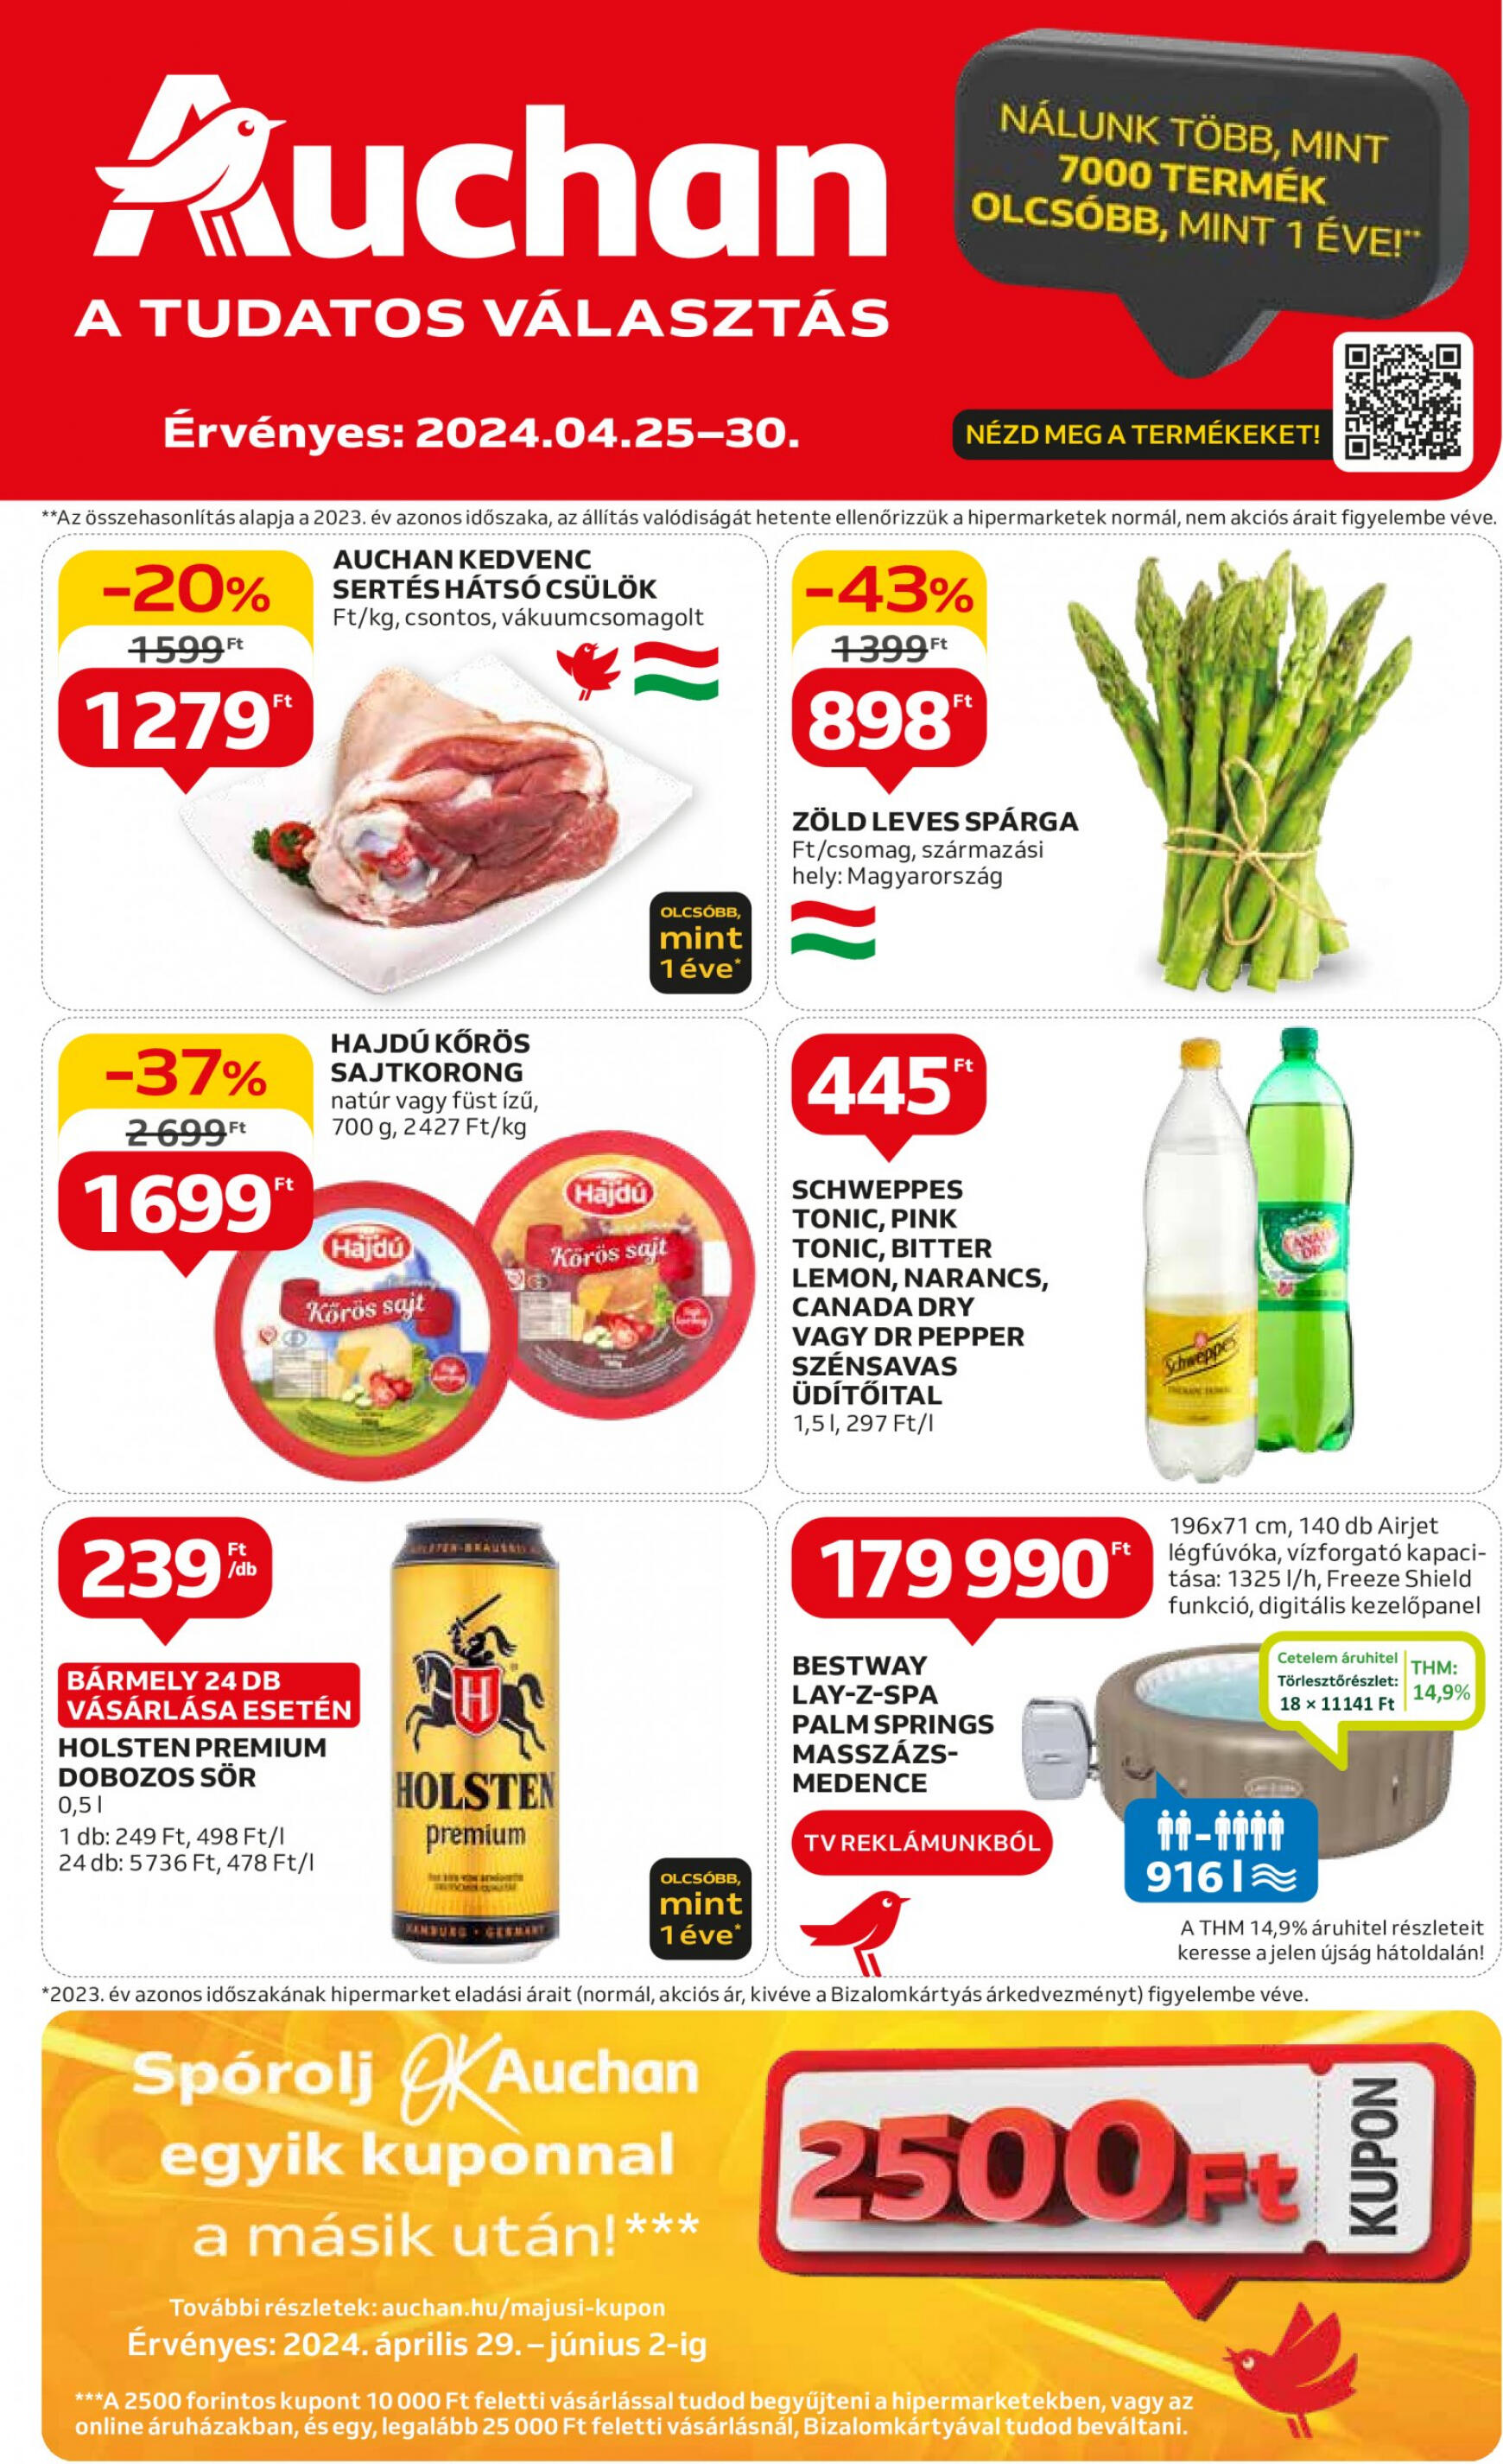 auchan - Aktuális újság Auchan 04.25. - 04.30. - page: 1